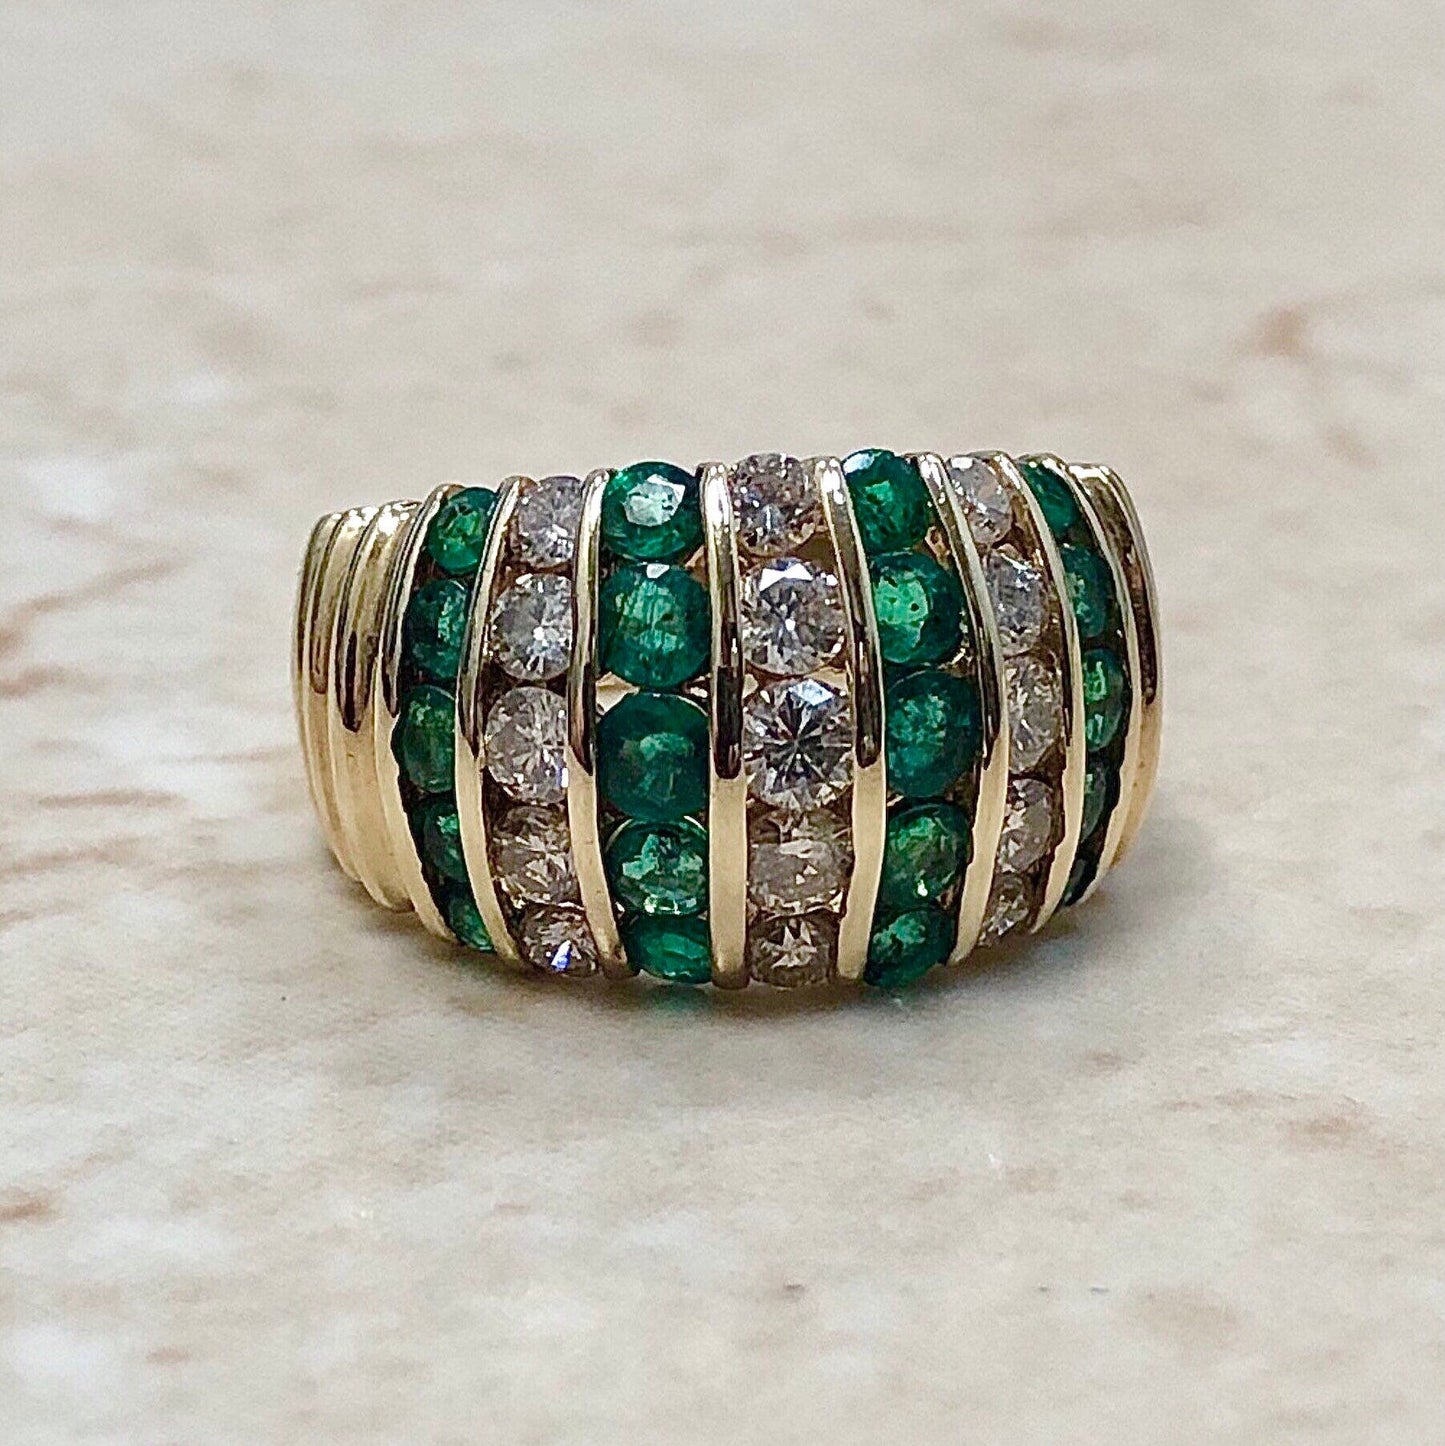 Vintage Natural Emerald & Diamond Ring 1.75 CTTW - 14 Karat Yellow Gold - May Birthstone - Genuine Gemstone - Cocktail Ring - Size 7 US